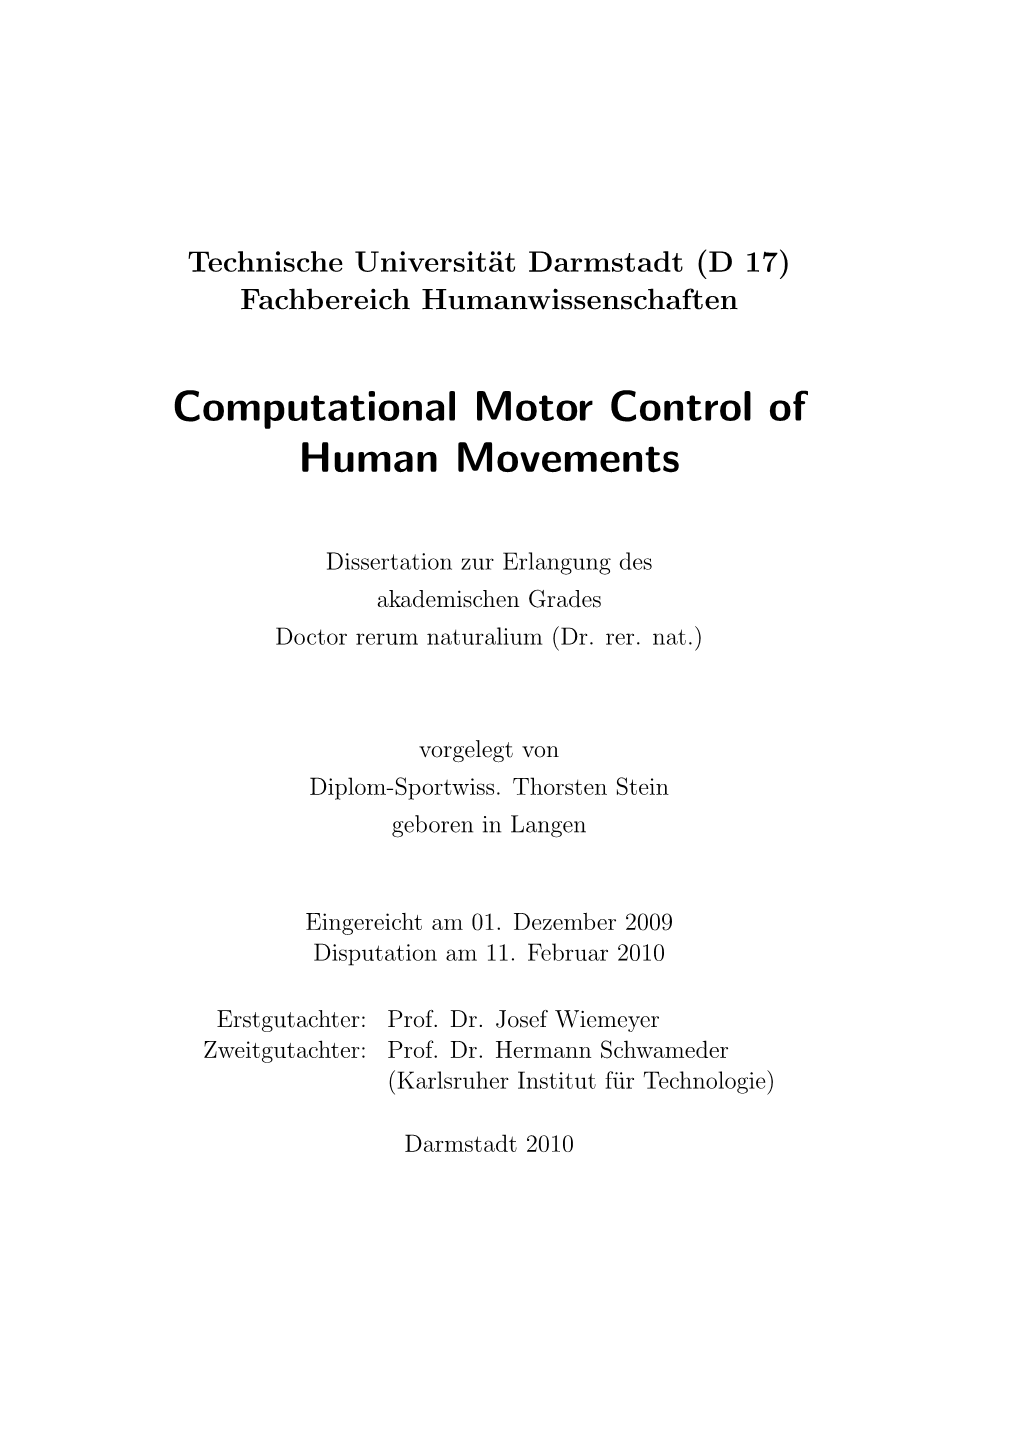 Computational Motor Control of Human Movements